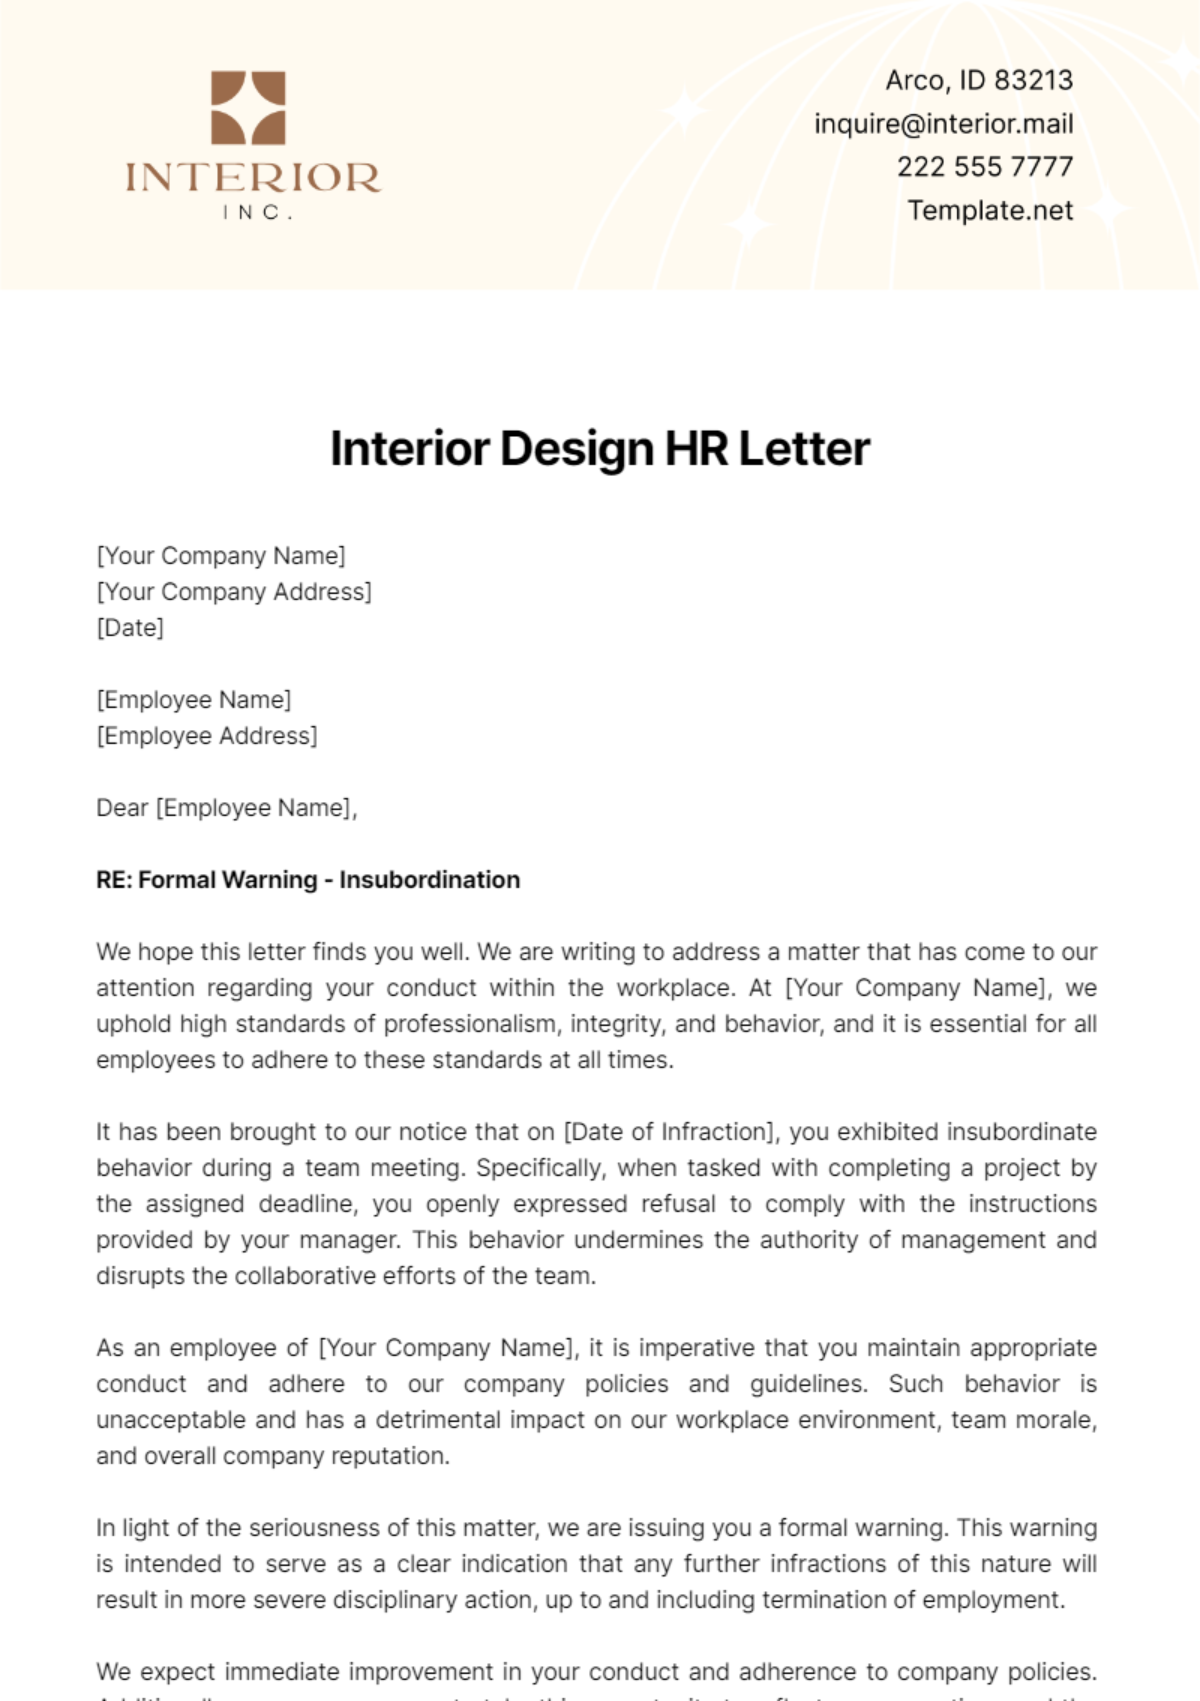 Interior Design HR Letter Template